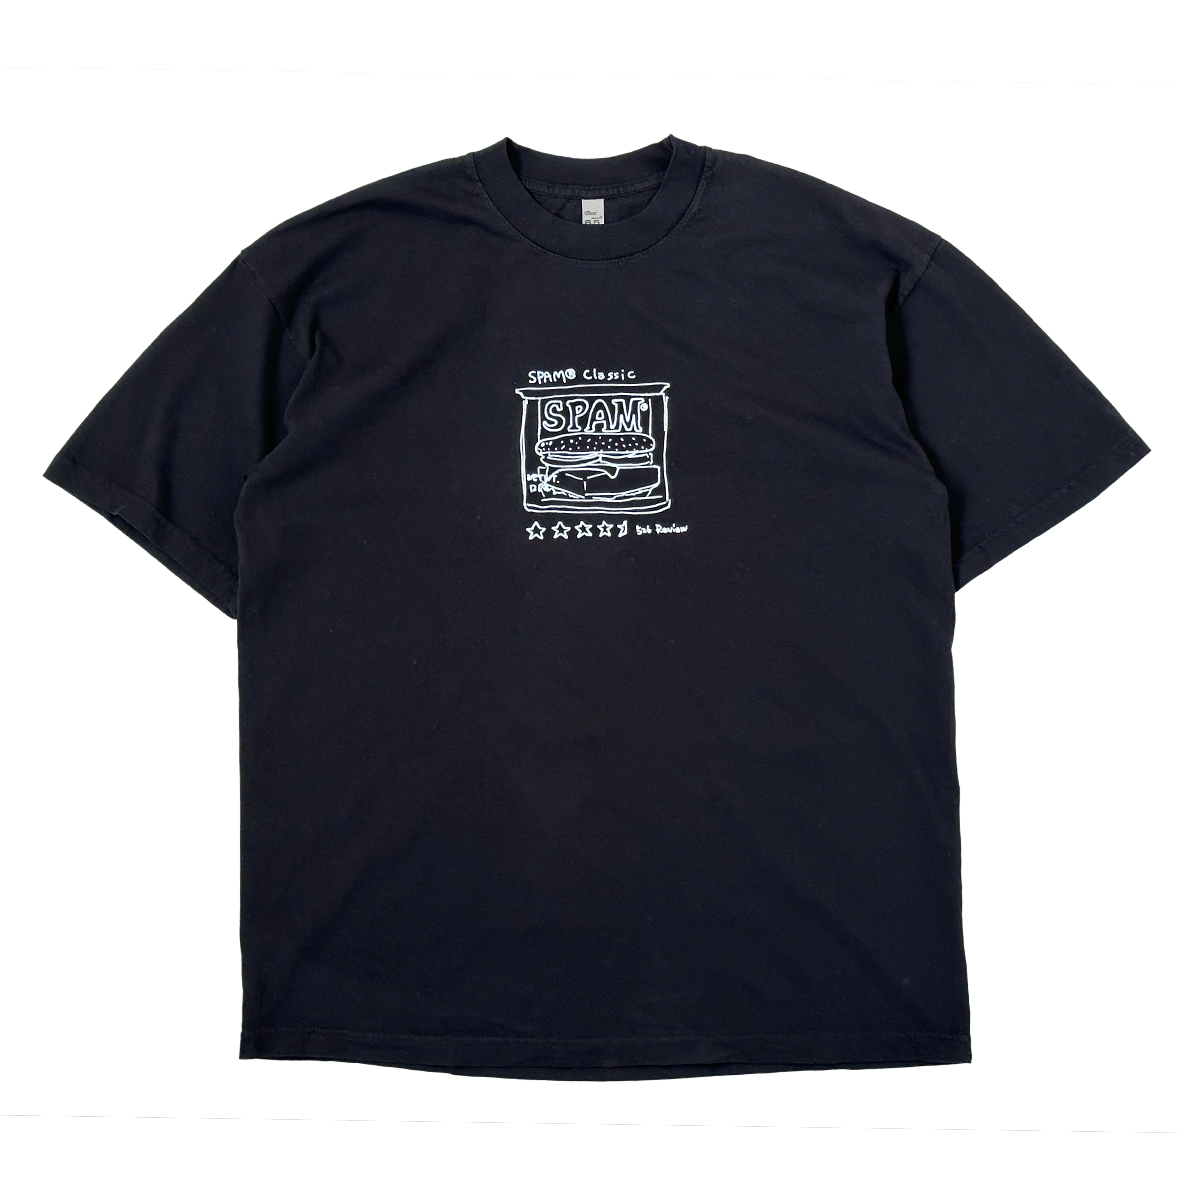 Spam Fan Club T-shirt - Seaweed